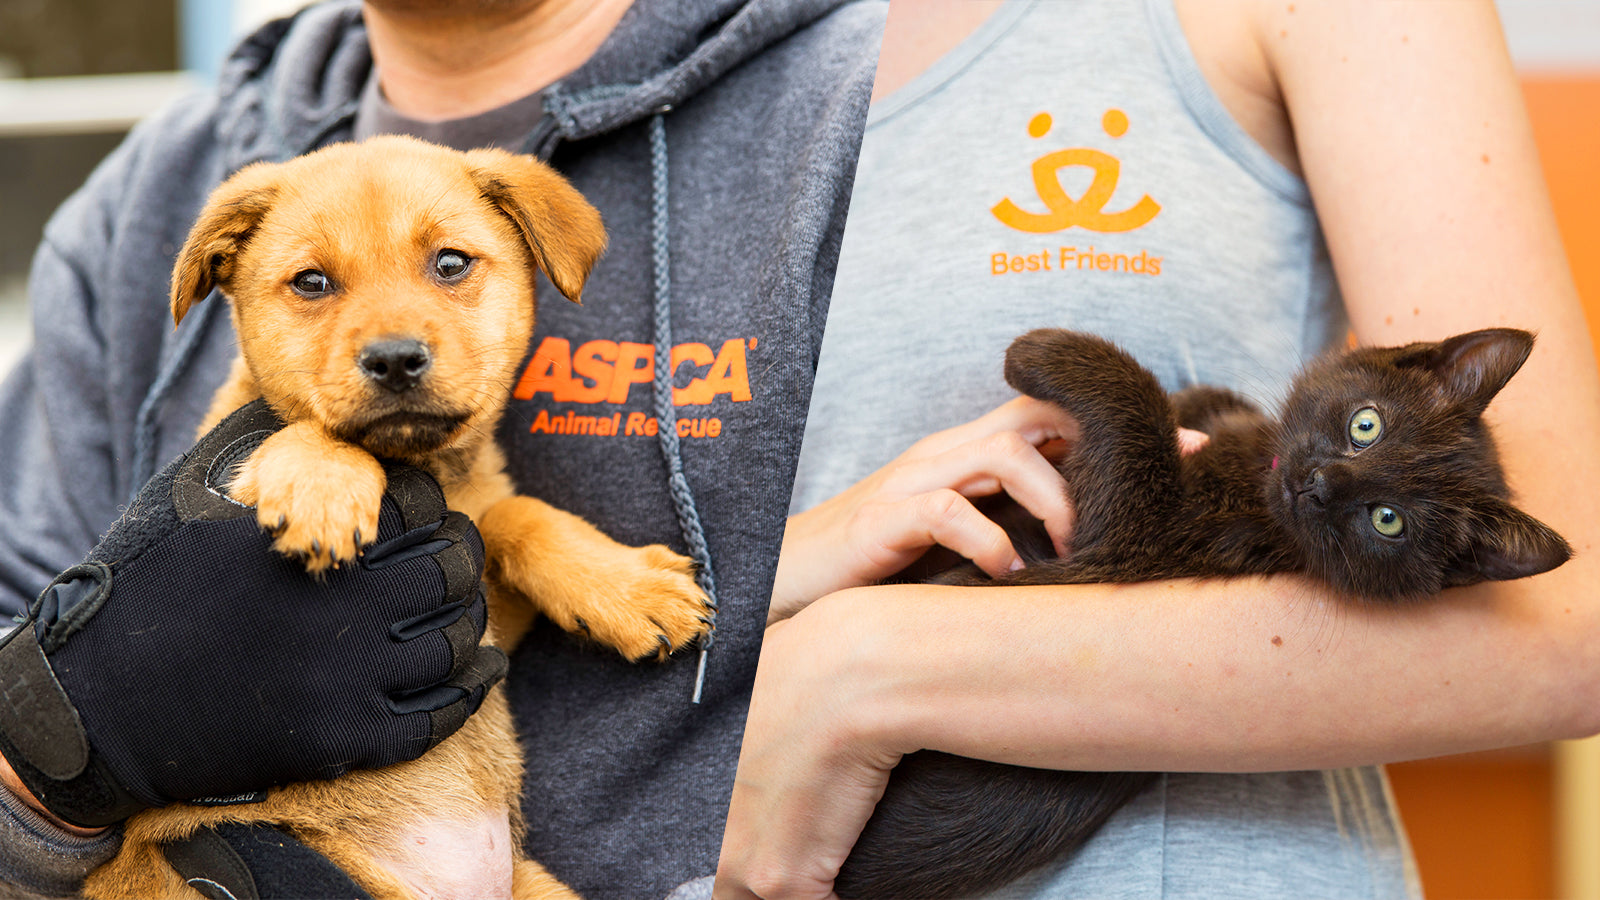 Best Friends Animal Society + Lil BUB’s BIG Fund for the ASPCA